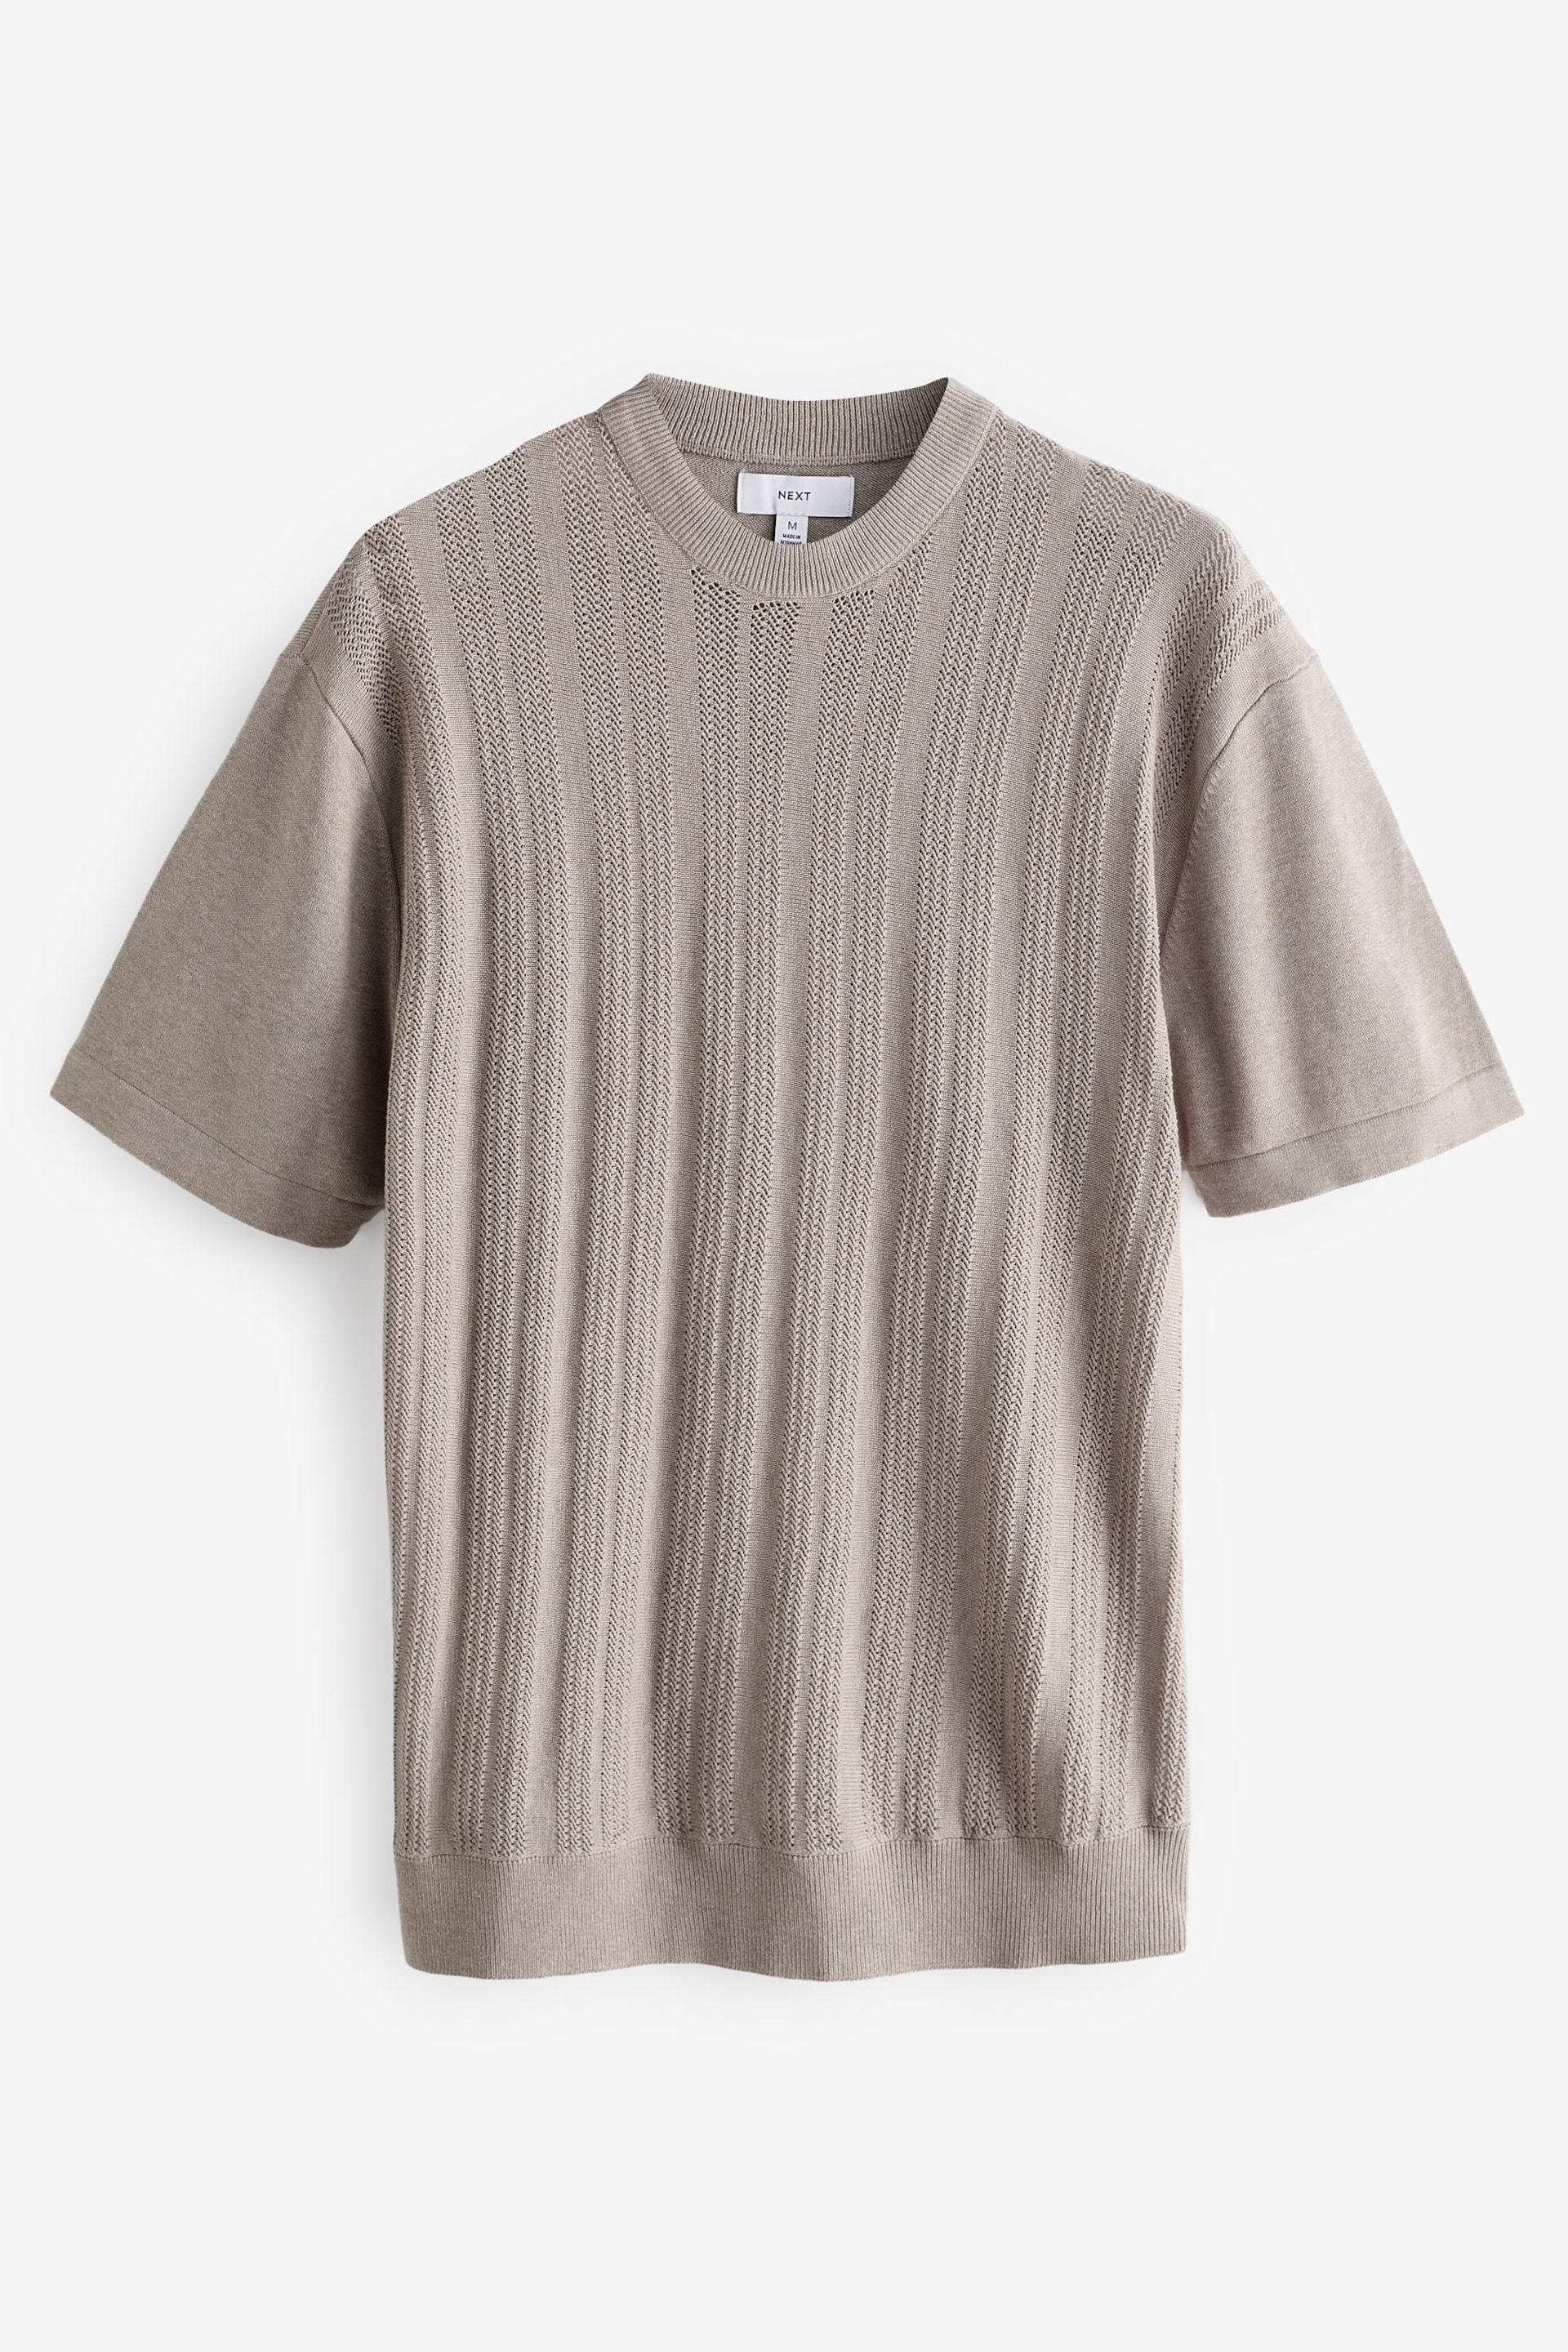 Dark Stone Regular Vertical Pointelle Knitted Polo Shirt - Image 3 of 3